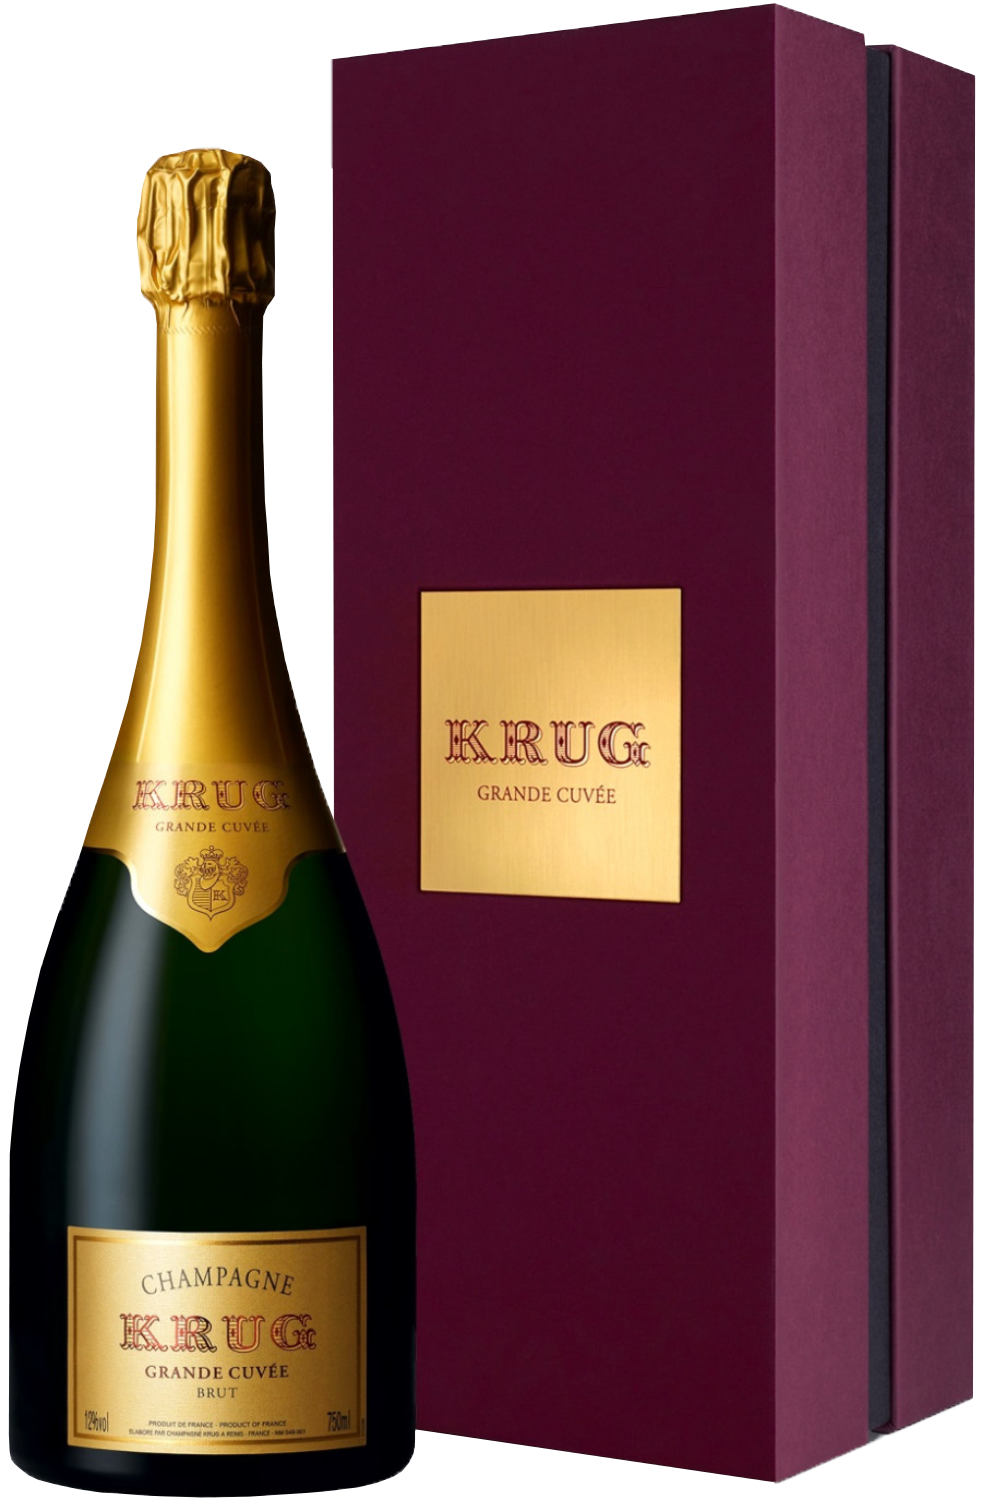 Krug Grande Cuvee Brut Champagne AOC (gift box) montevi cuvee brut casa vinicola morando gift box